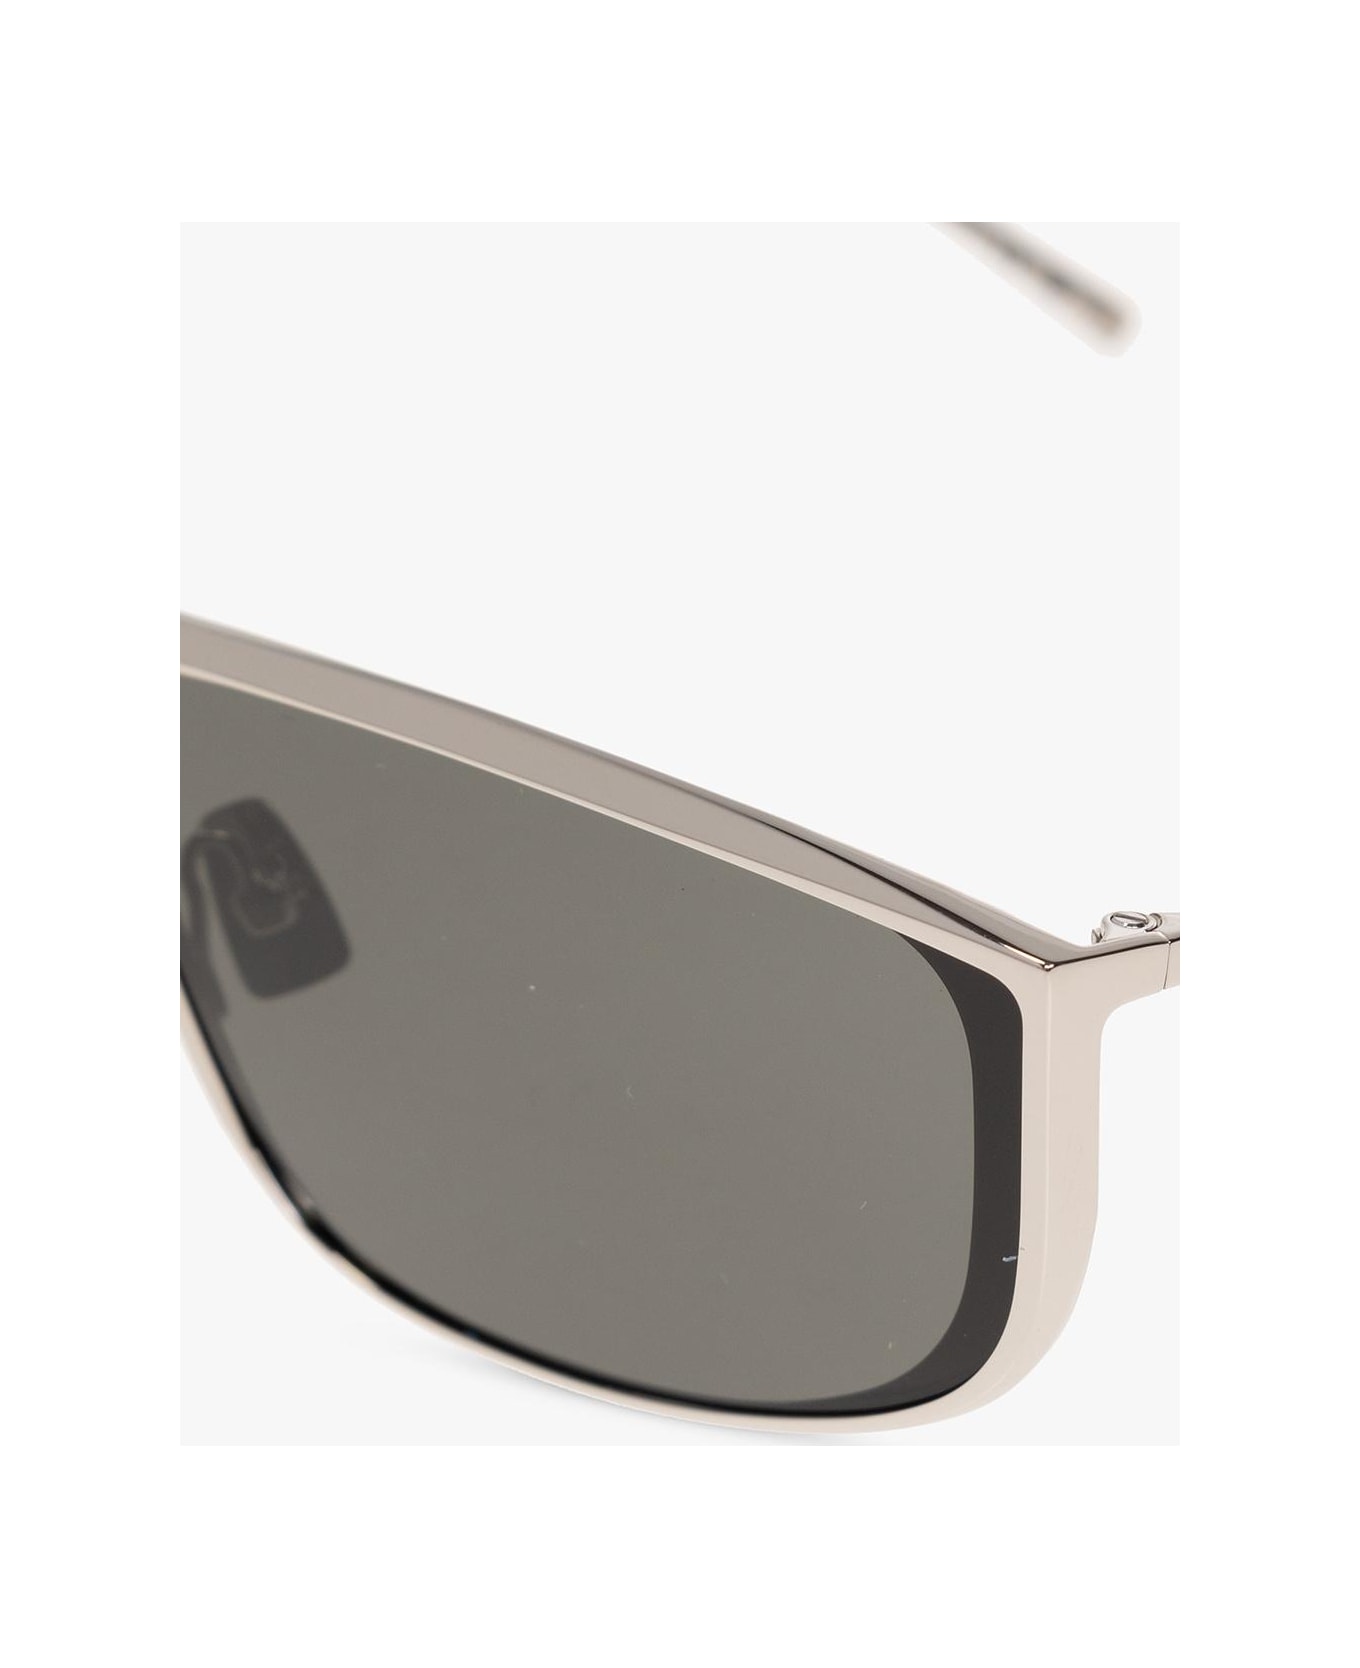 Saint Laurent Eyewear 'sl 605 Luna' Sunglasses